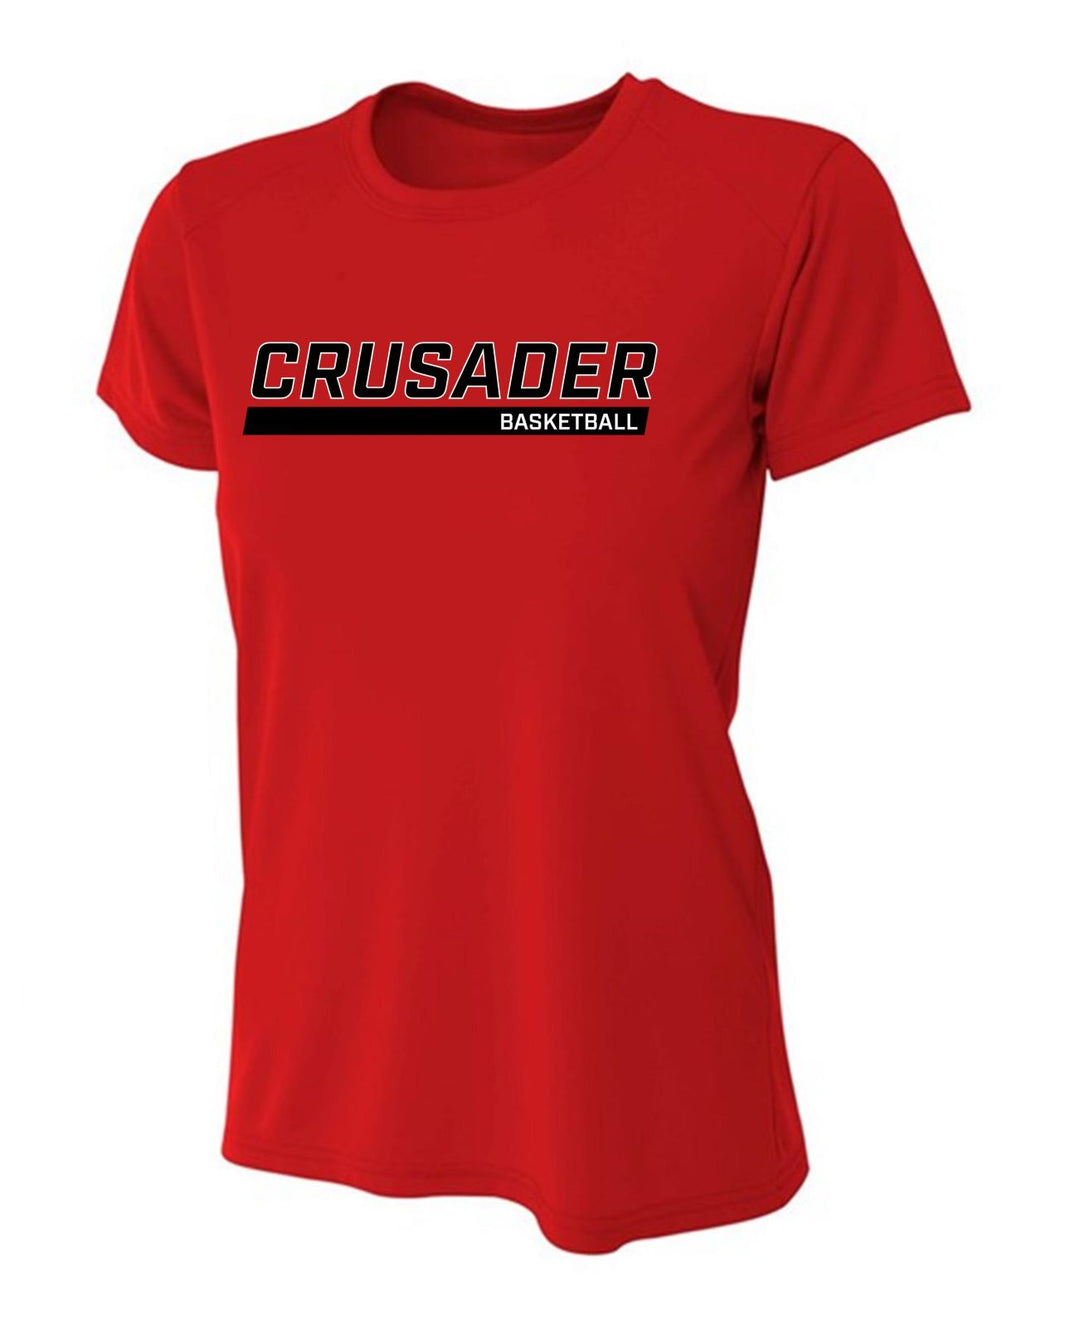 WCU Basketball Women's Short-Sleeve Performance Shirt WCU Basketball Red CRUSADER - Third Coast Soccer